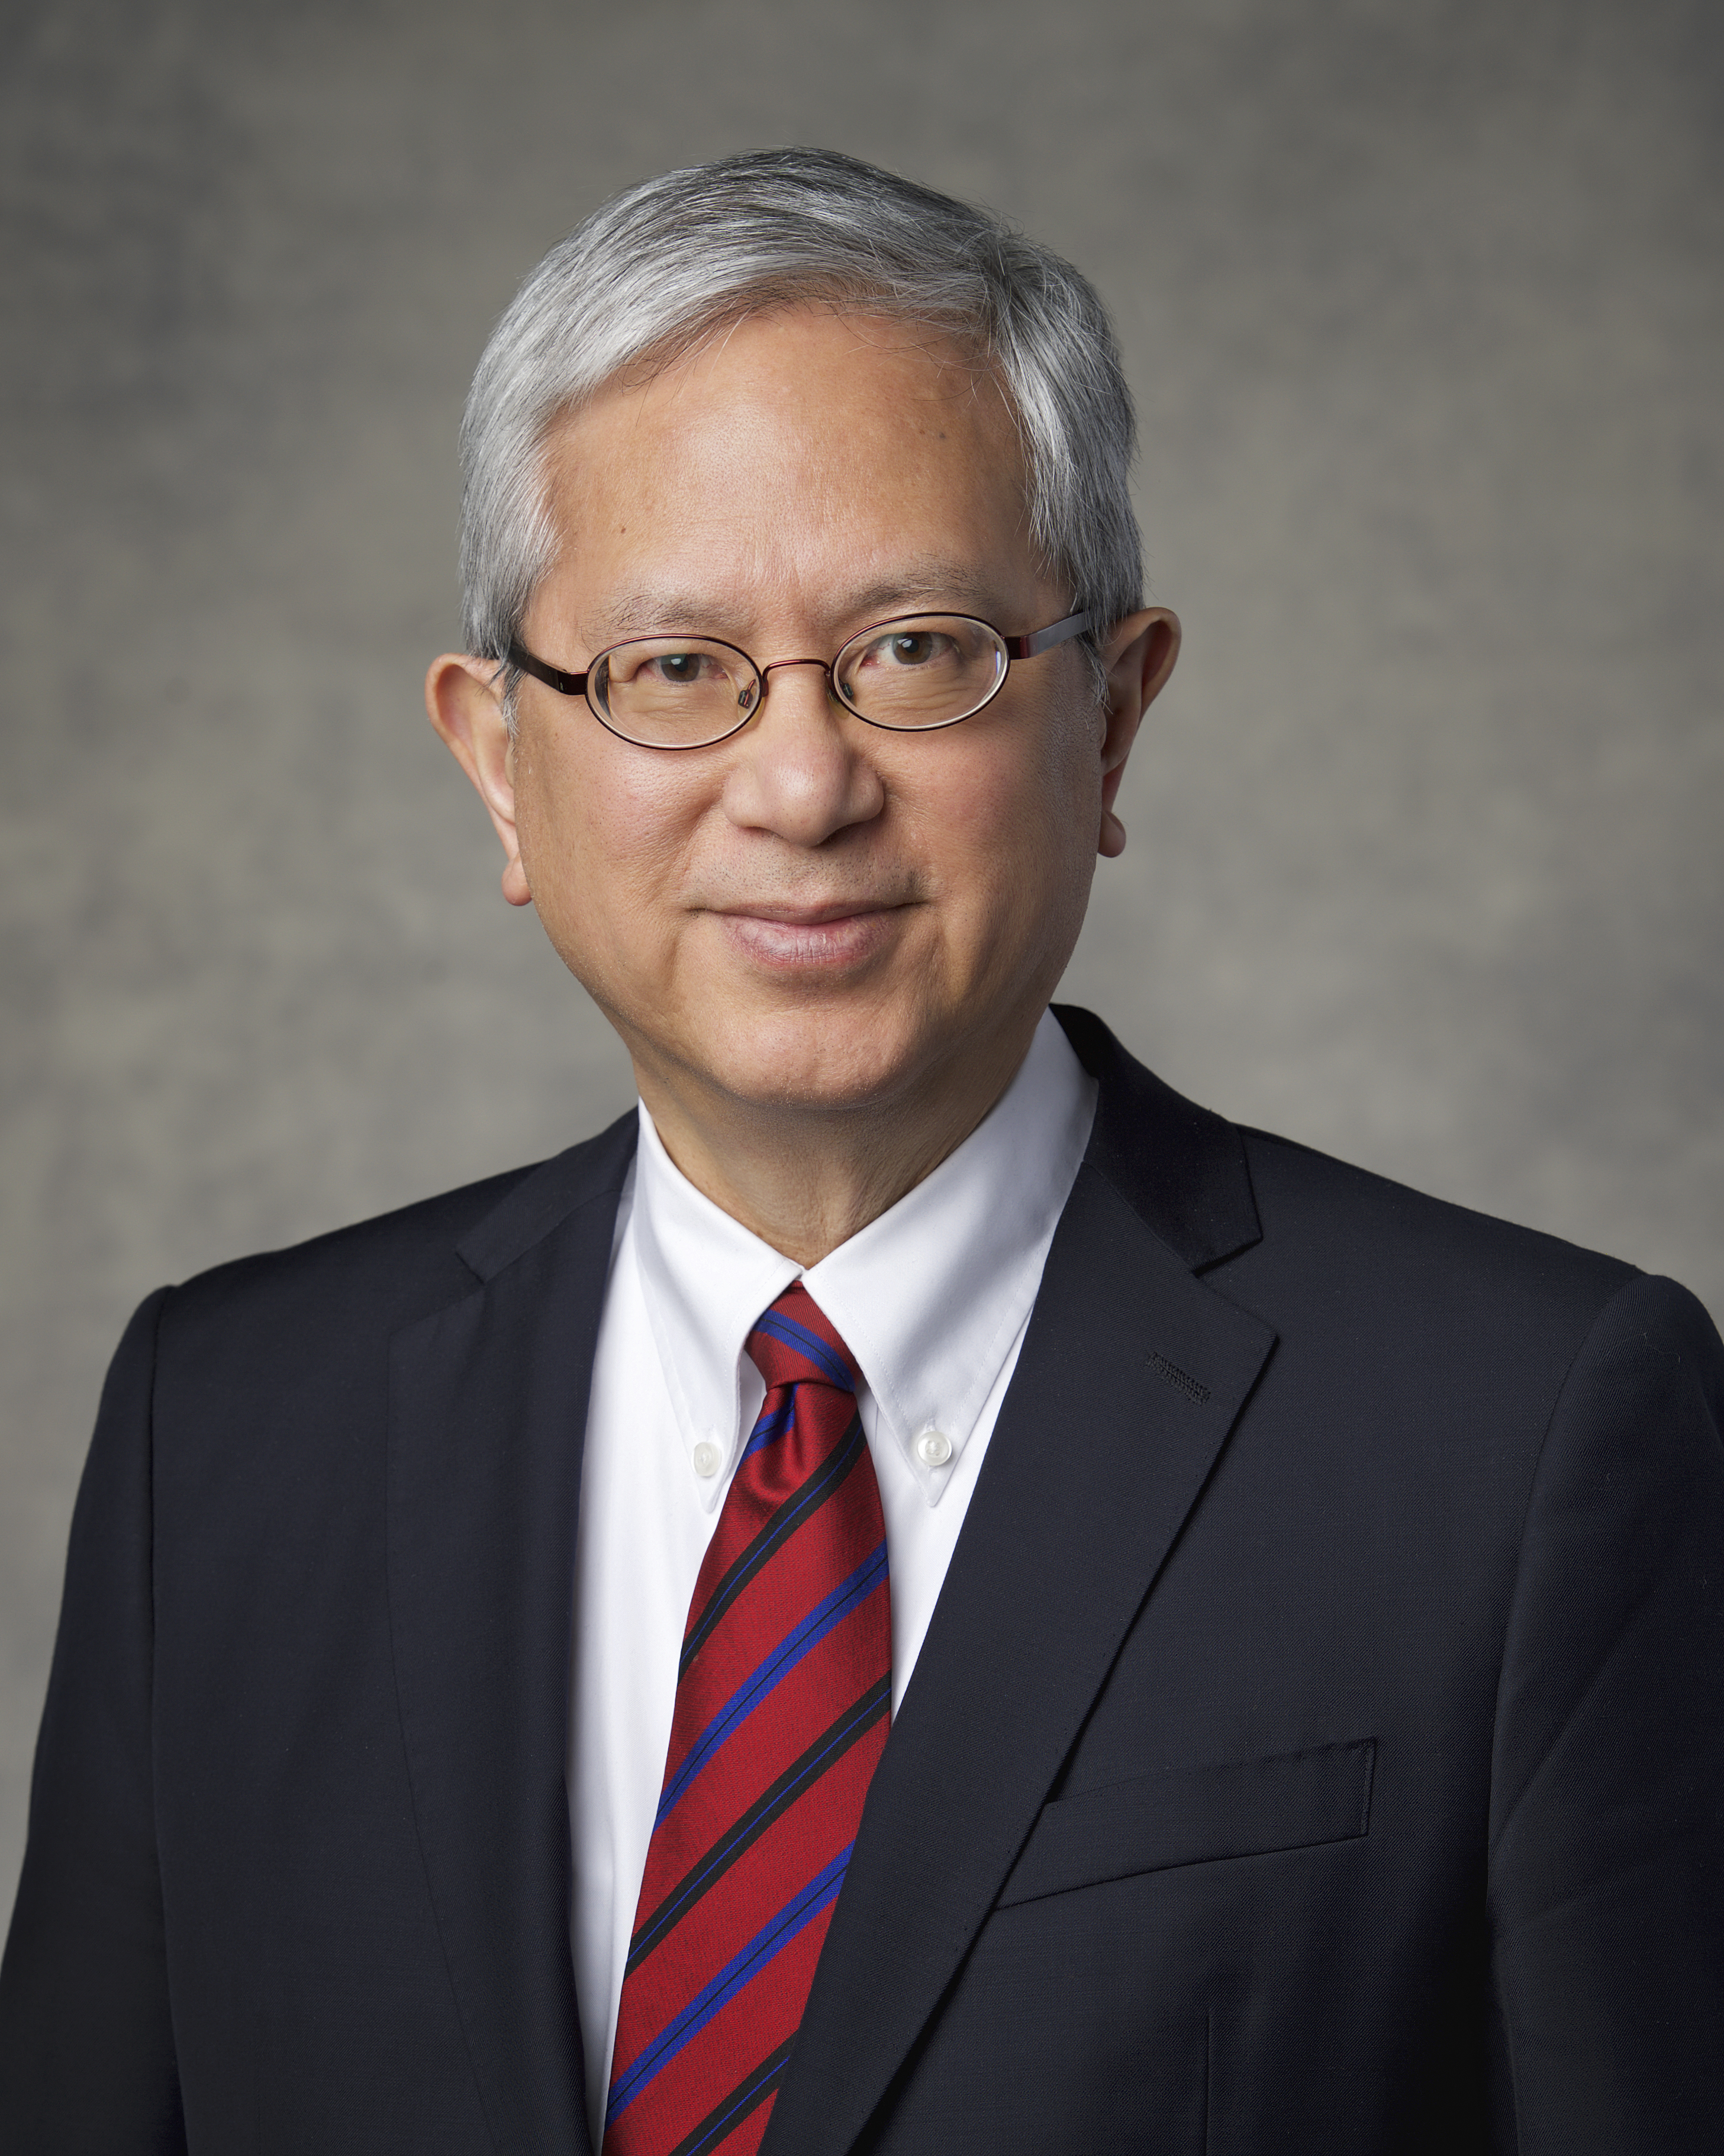 Former official Portrait of Elder Gerrit W. Gong.  Photographed March 2017.